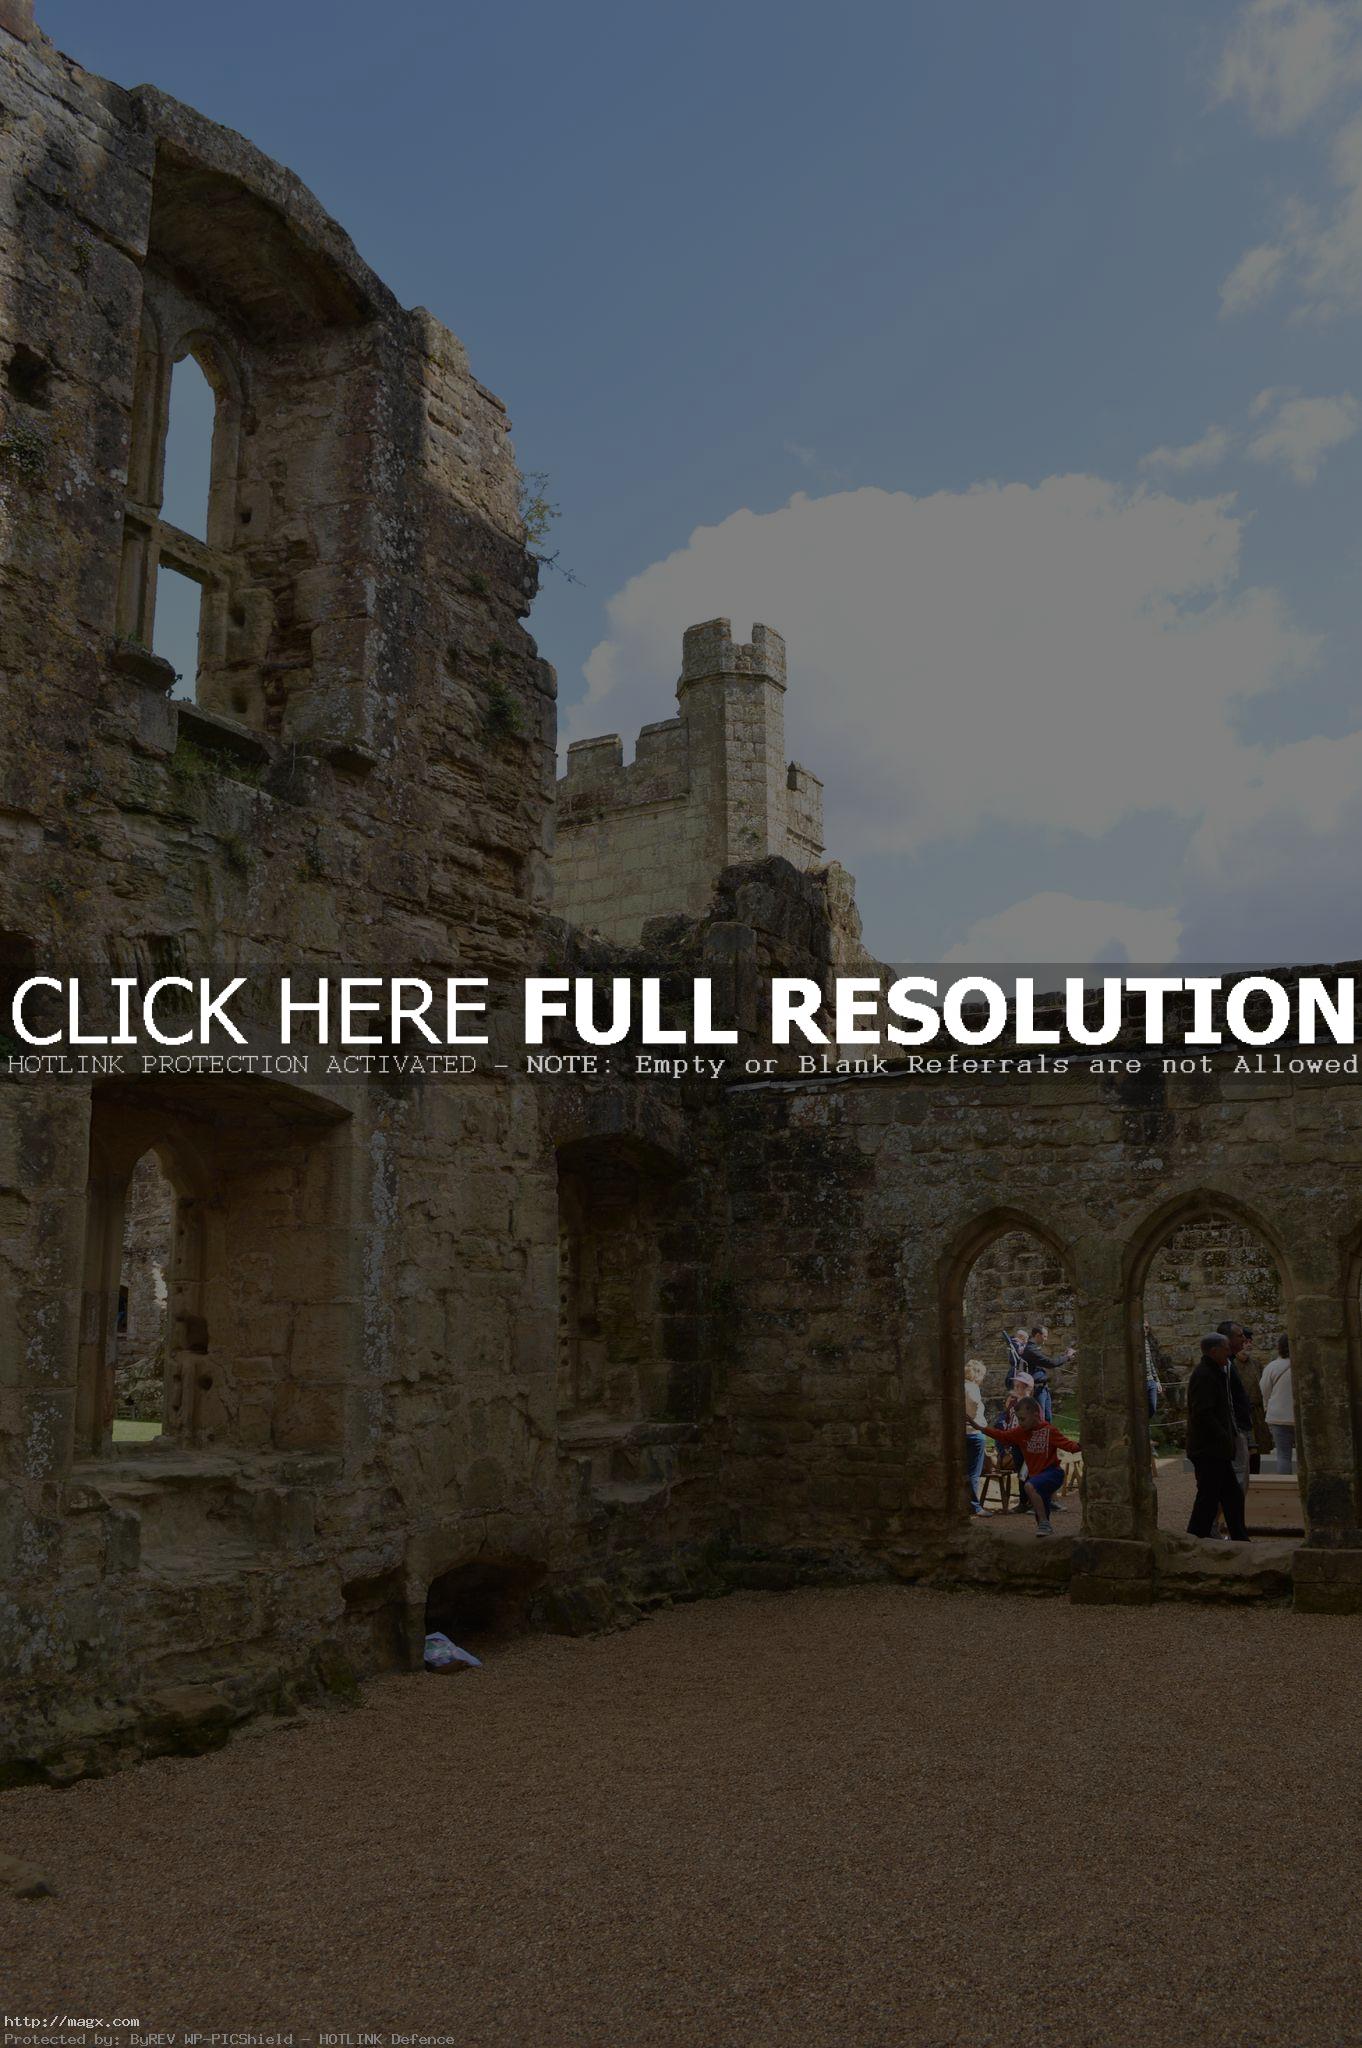 bodiam castle8 Bodiam Most Picturesque Castle in East Sussex